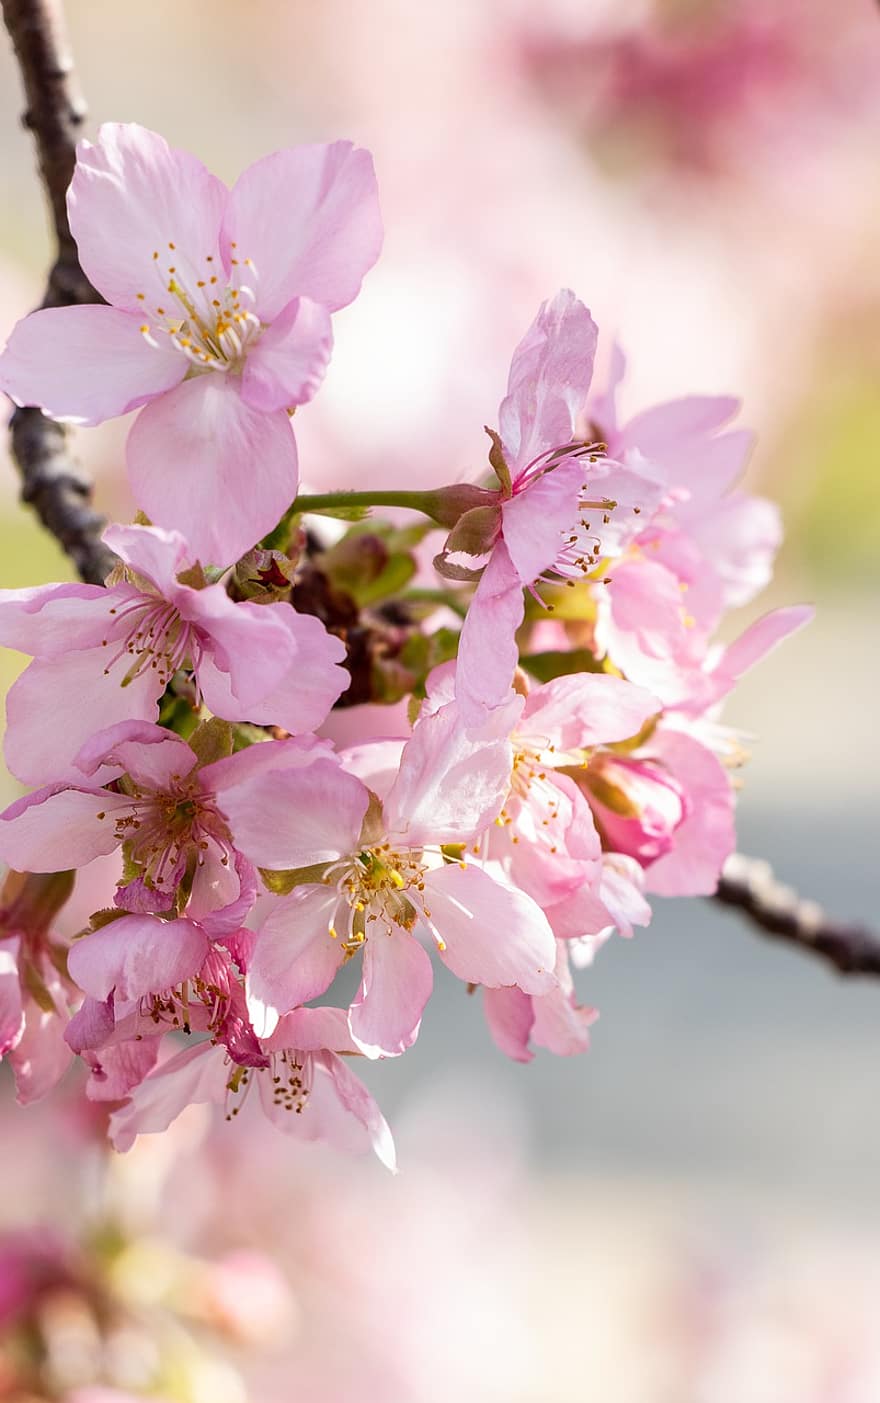 Cherry Blossom, Flowers, Branch, Pink Flowers, Petals, Bloom, Blossom, Sakura, Spring, Tree, Natural